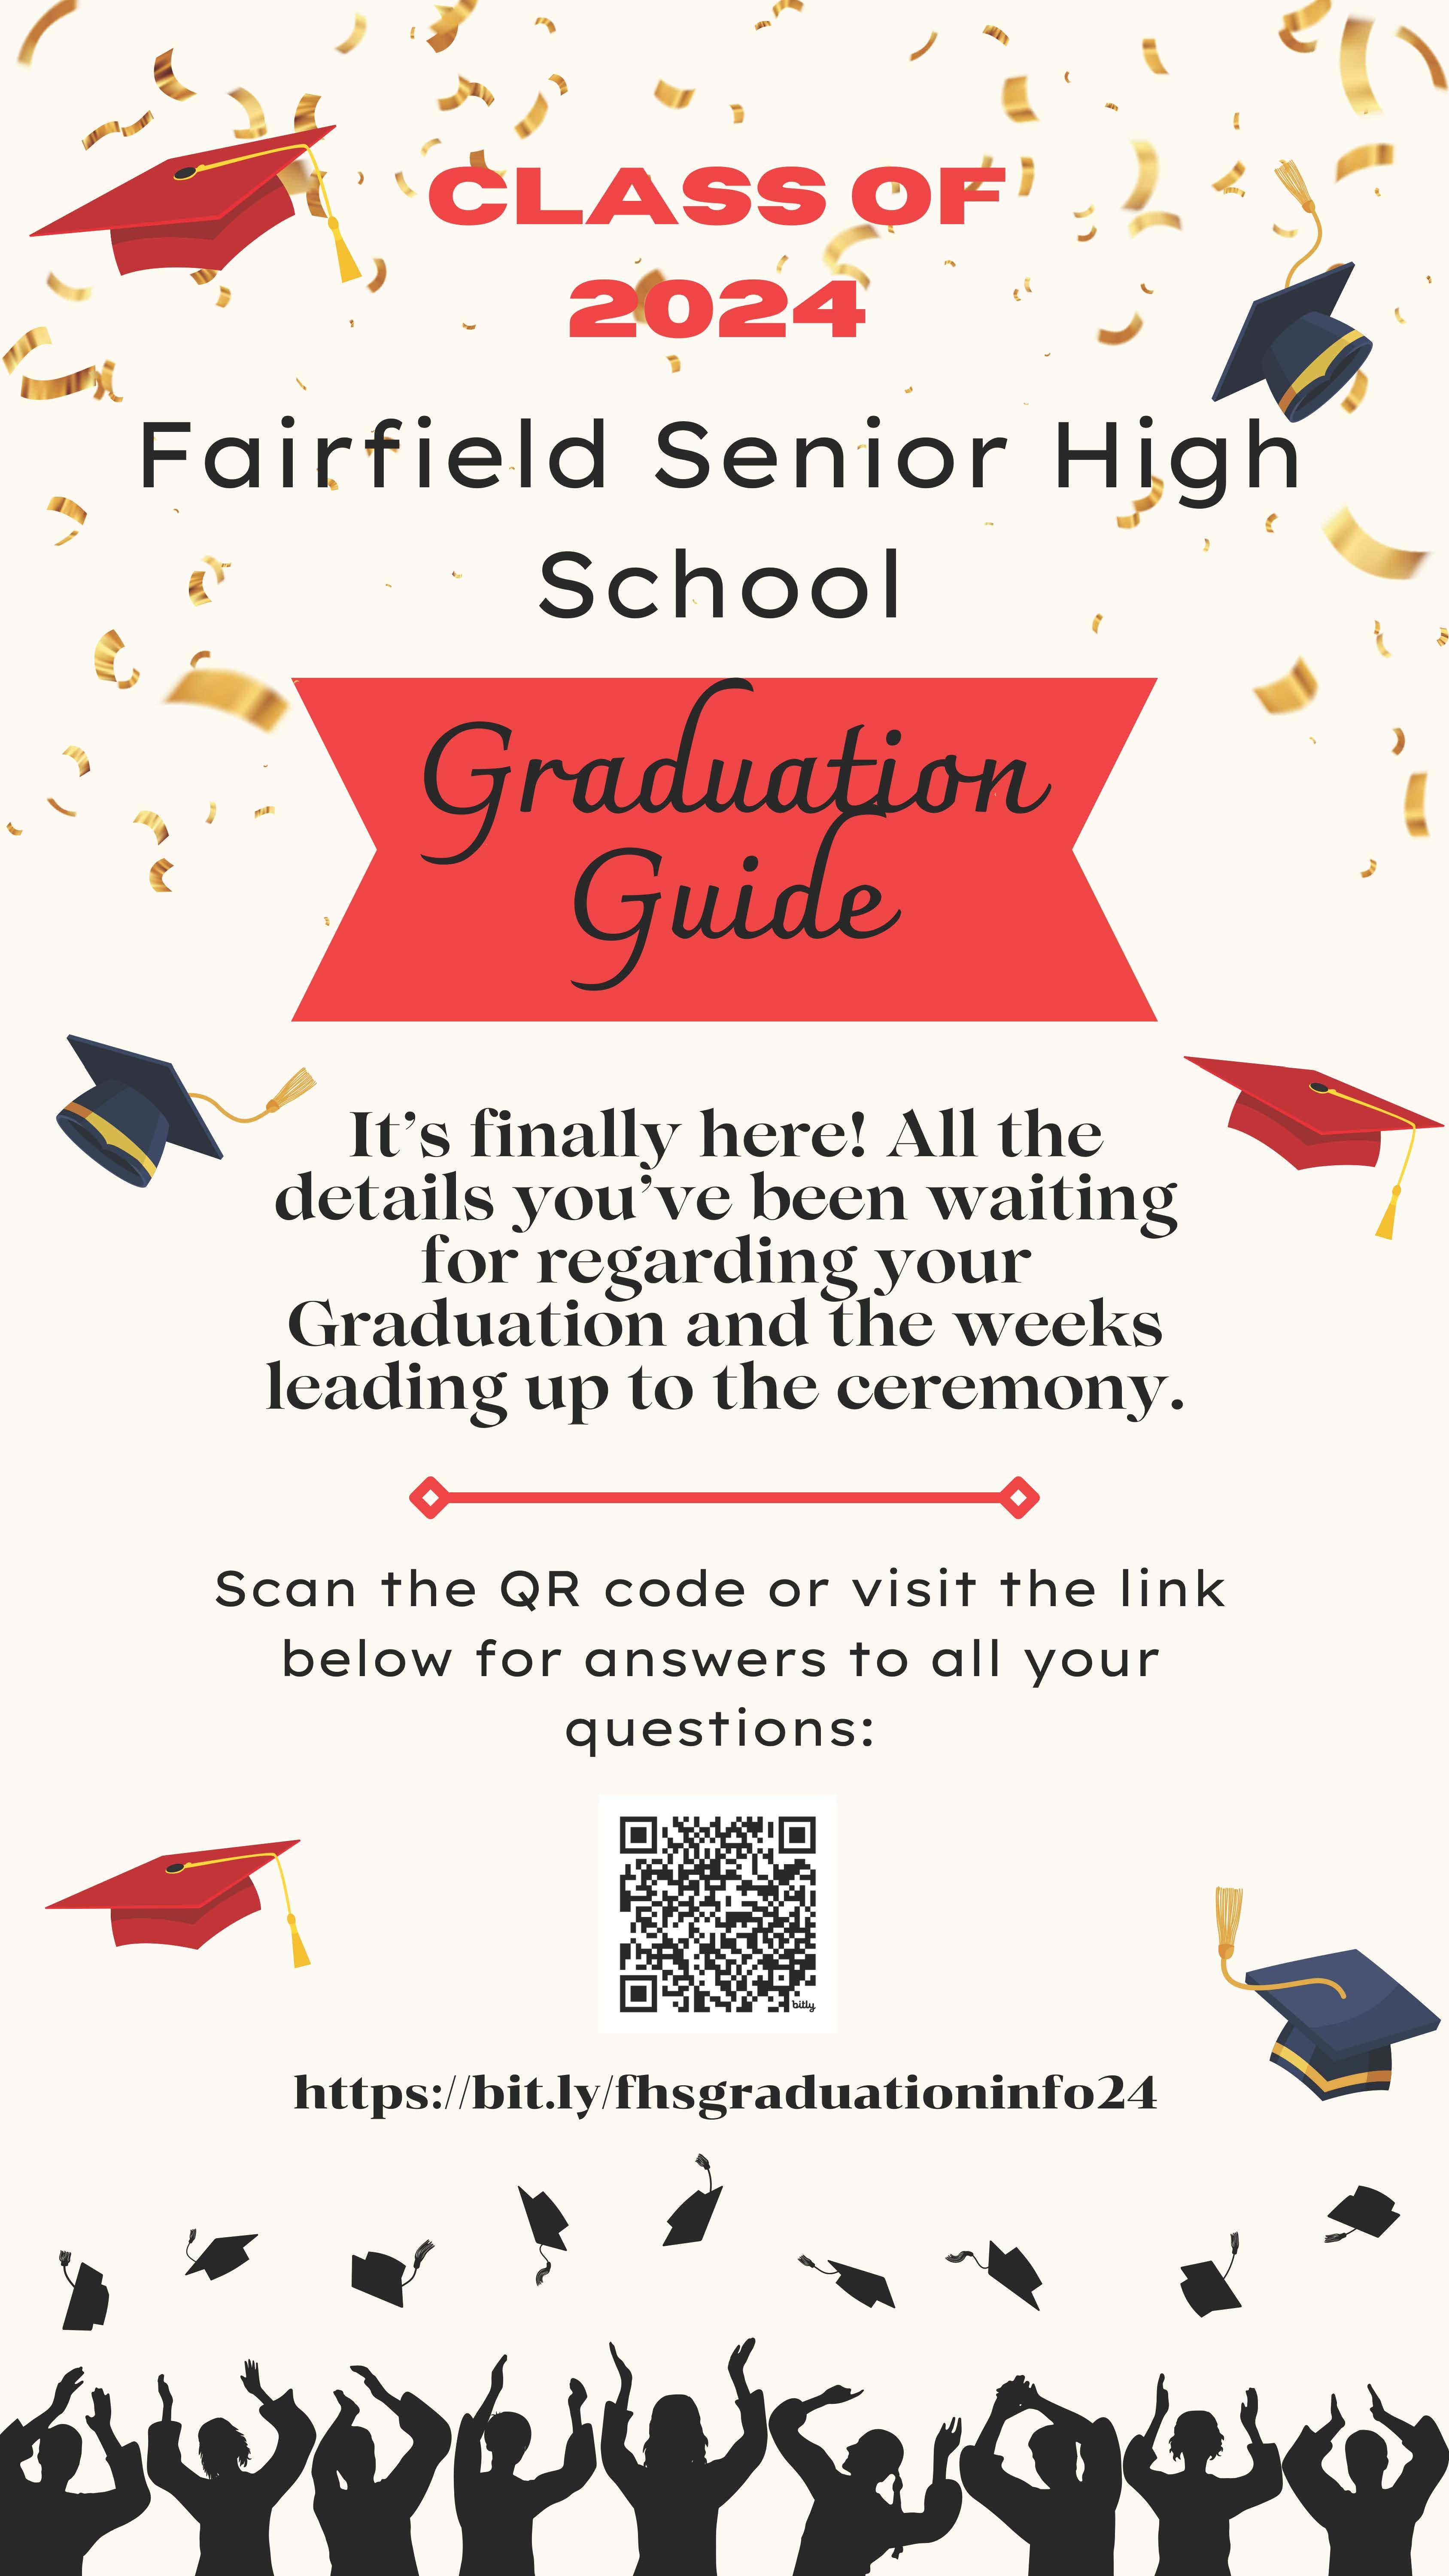 Graduation Guide Flyer